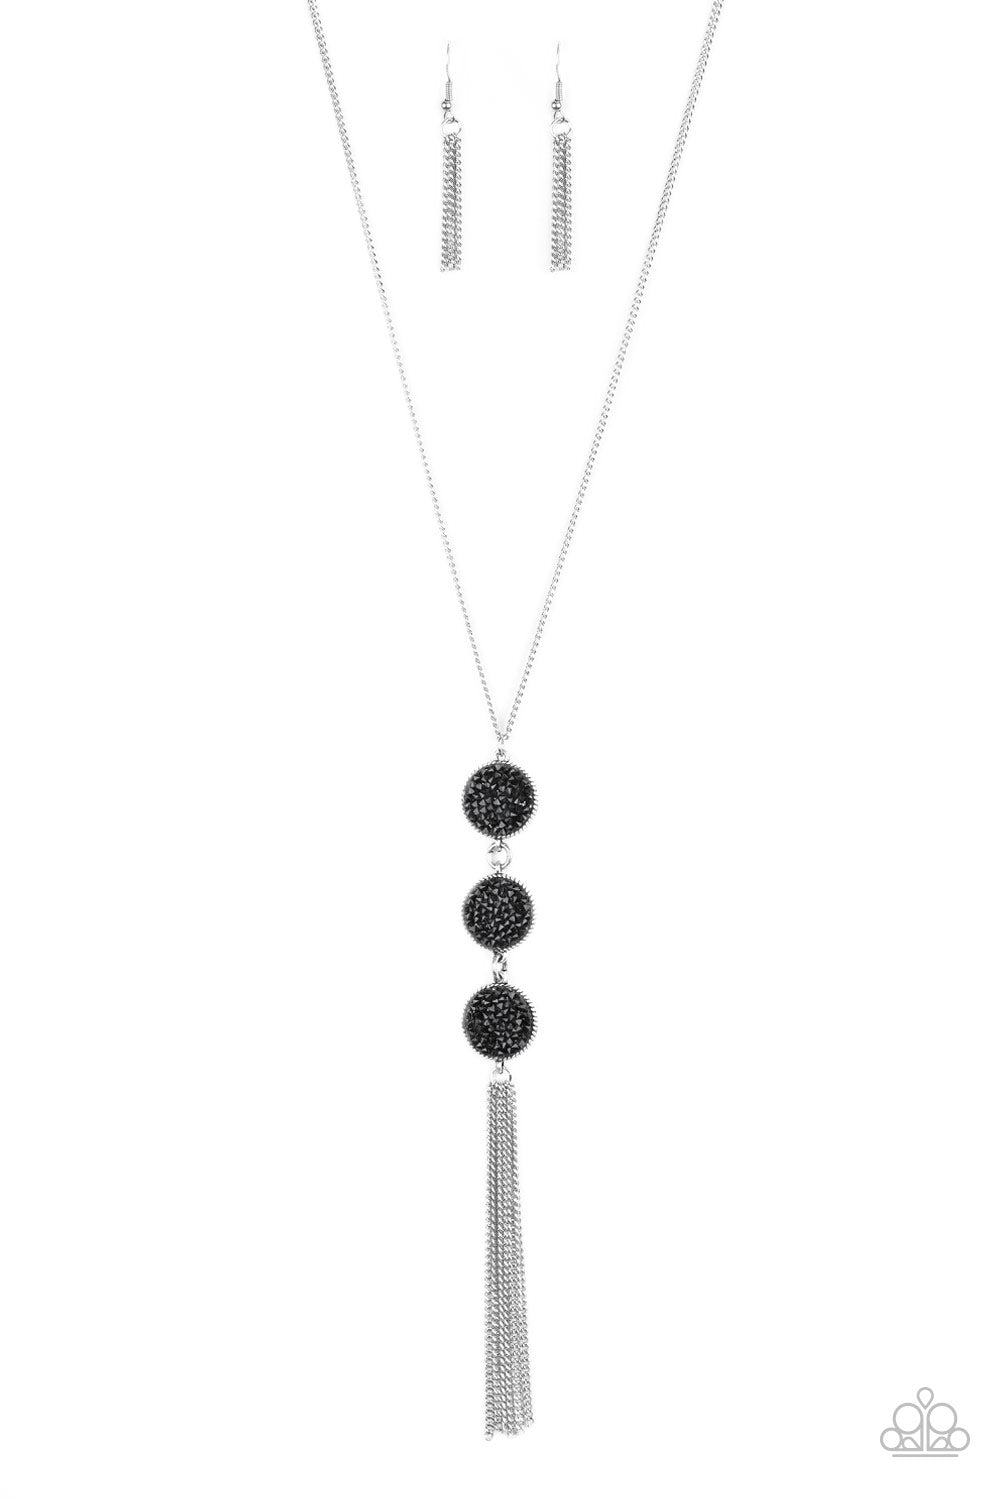 Triple Shimmer Black Necklace - Paparazzi Accessories